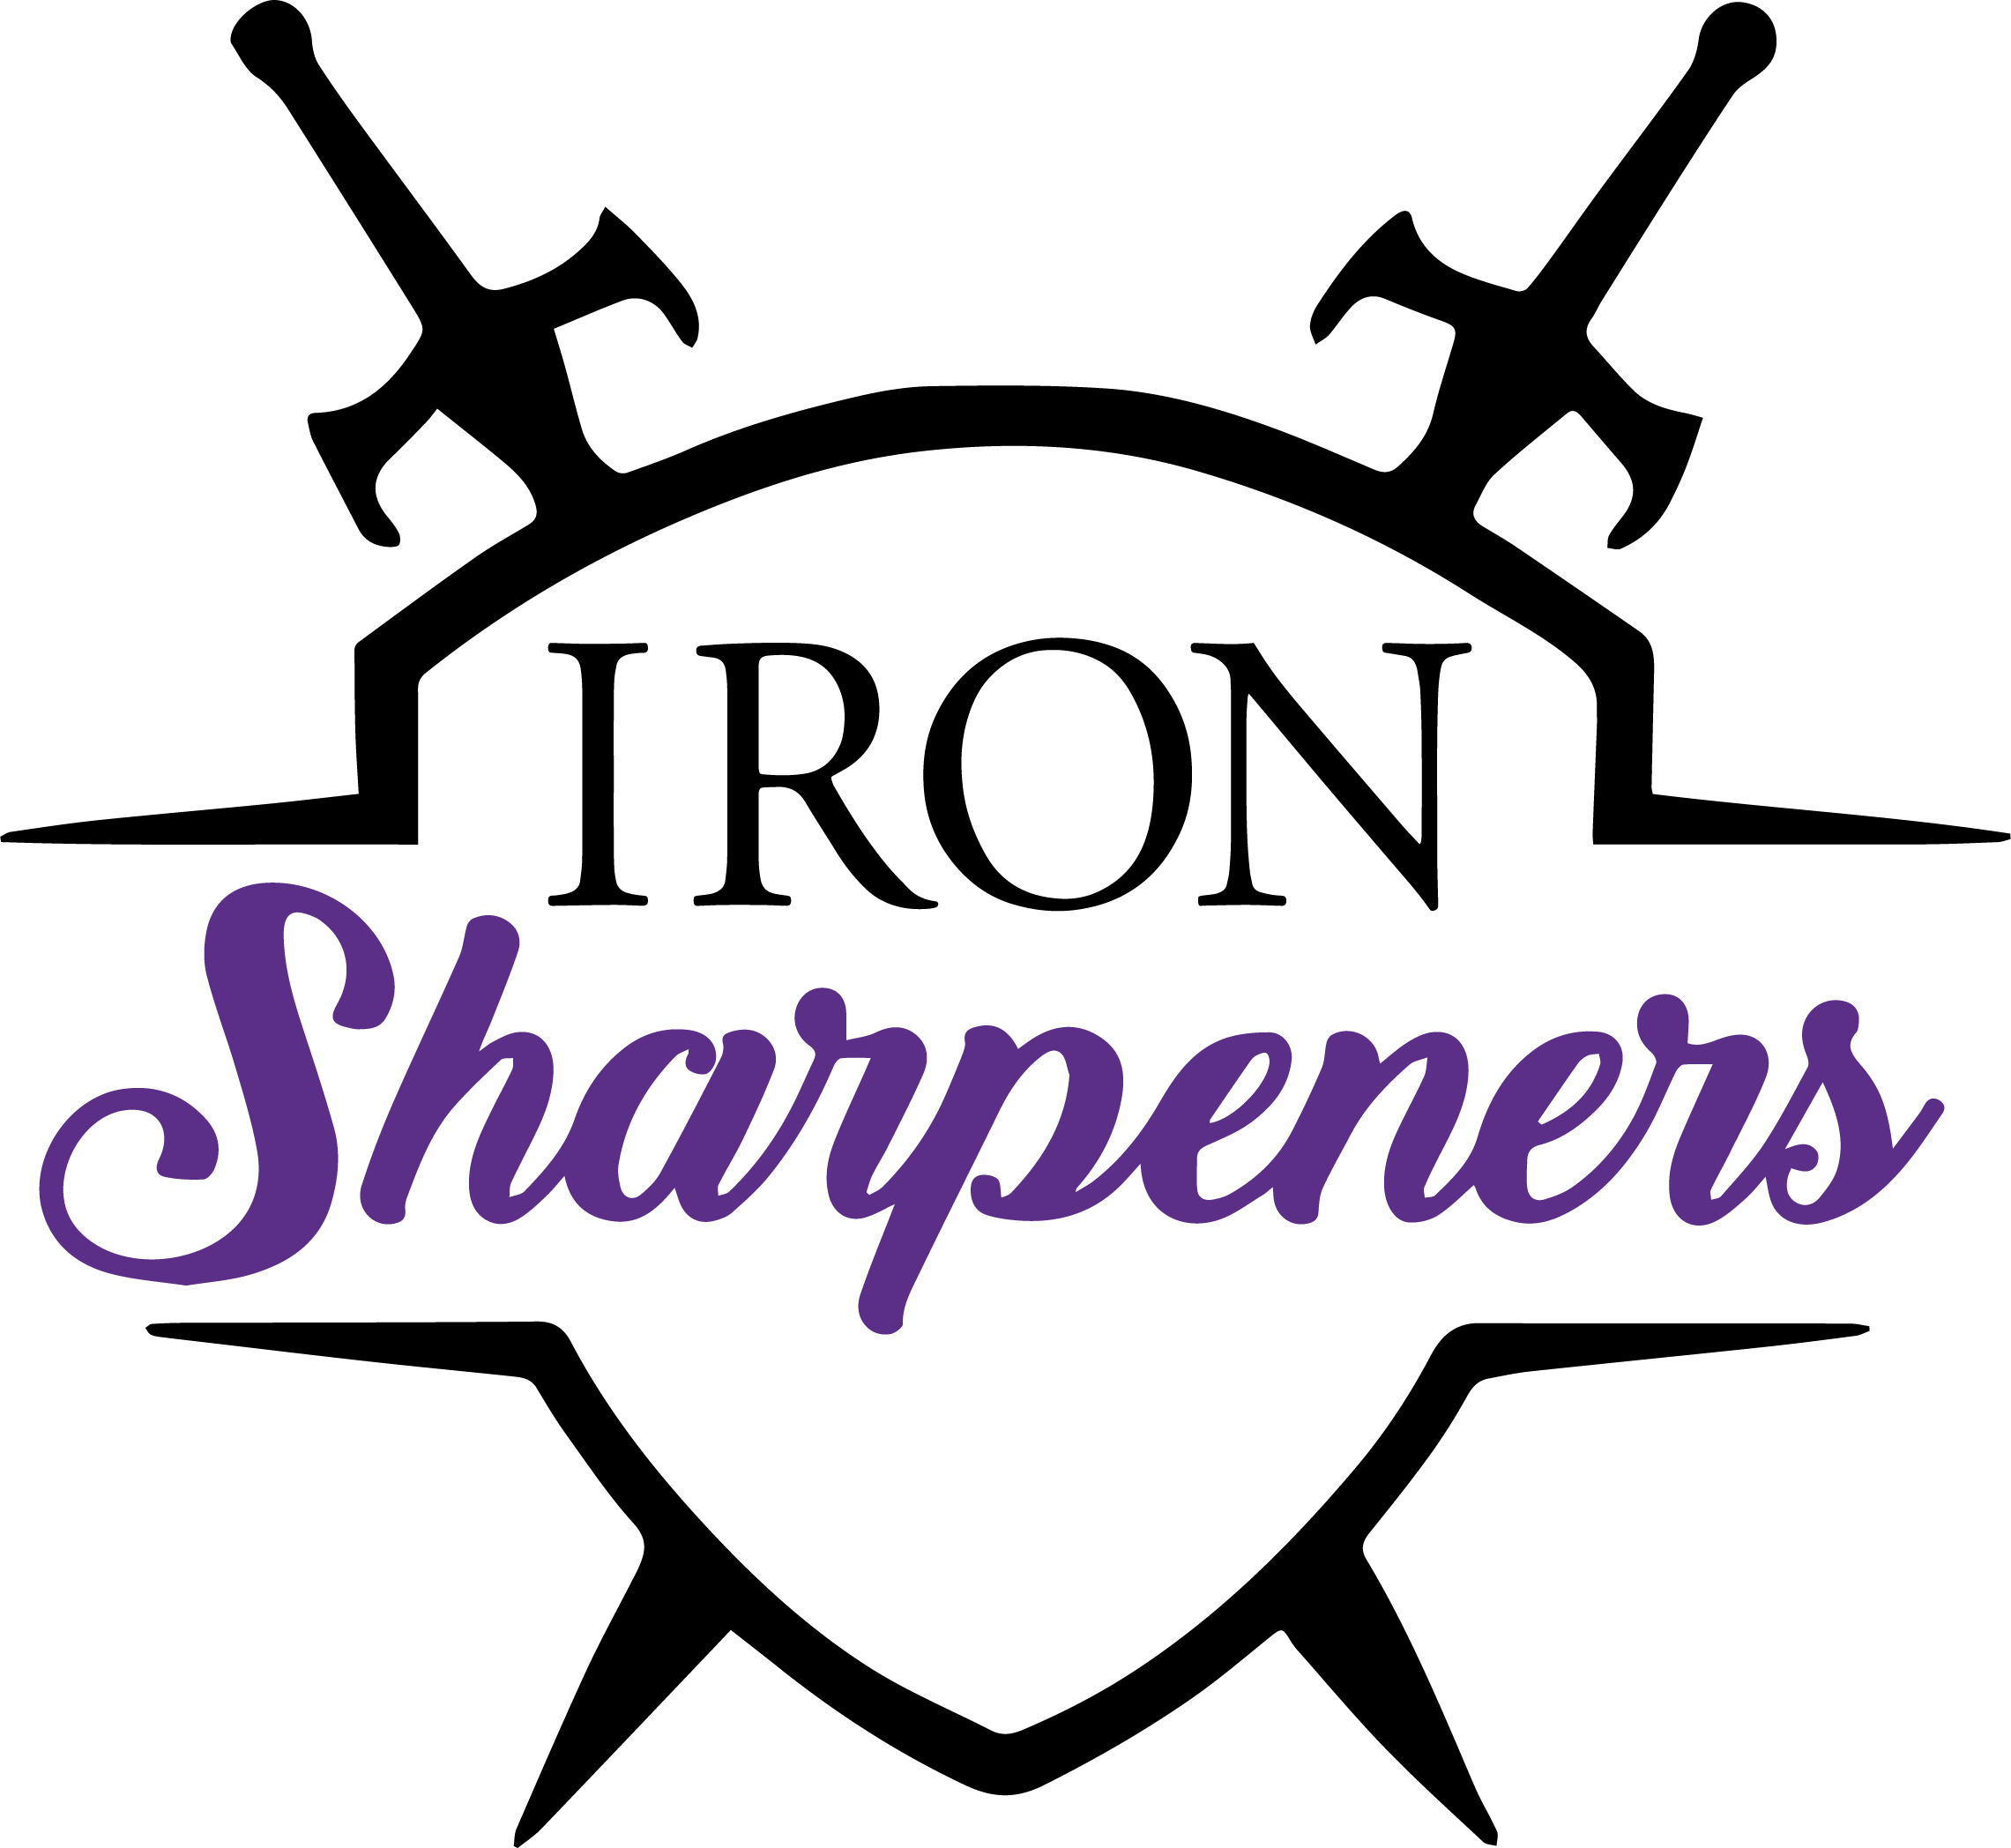 Iron Sharpeners run for the Dream 2021 - Tampa, FL 2021